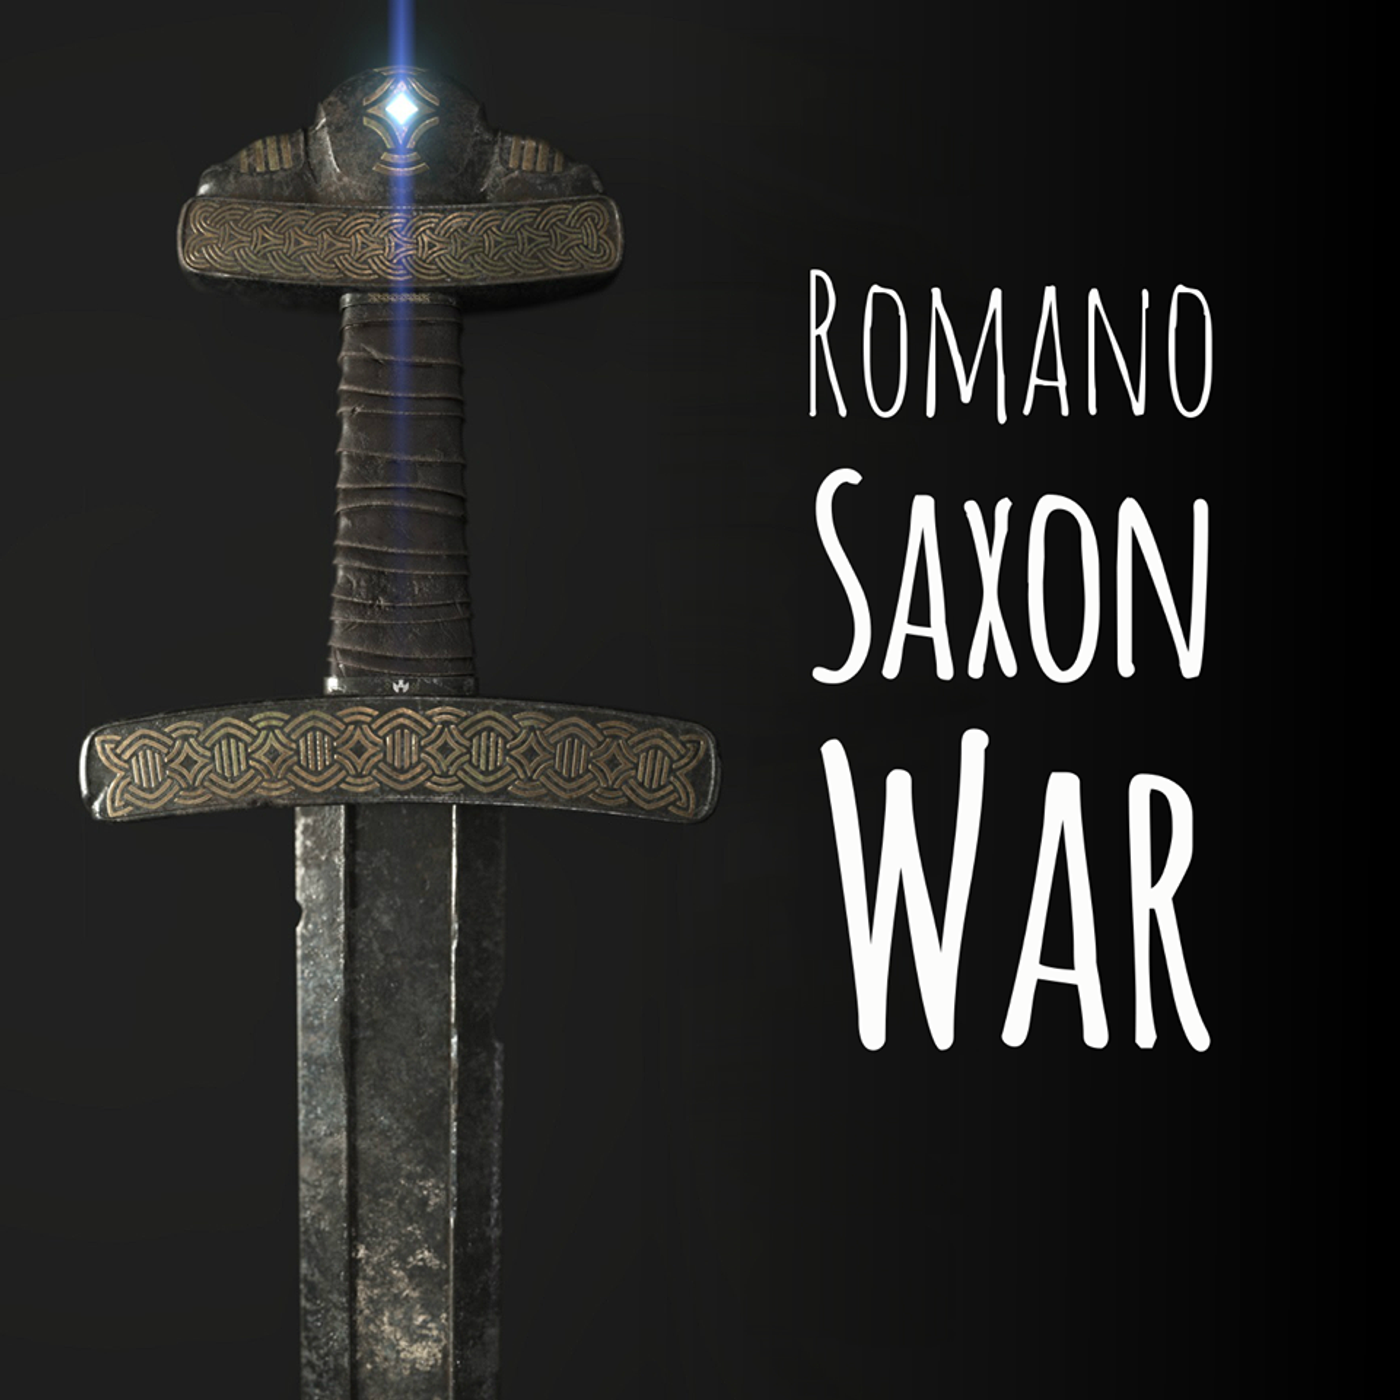 Romano Saxon War, Part 11